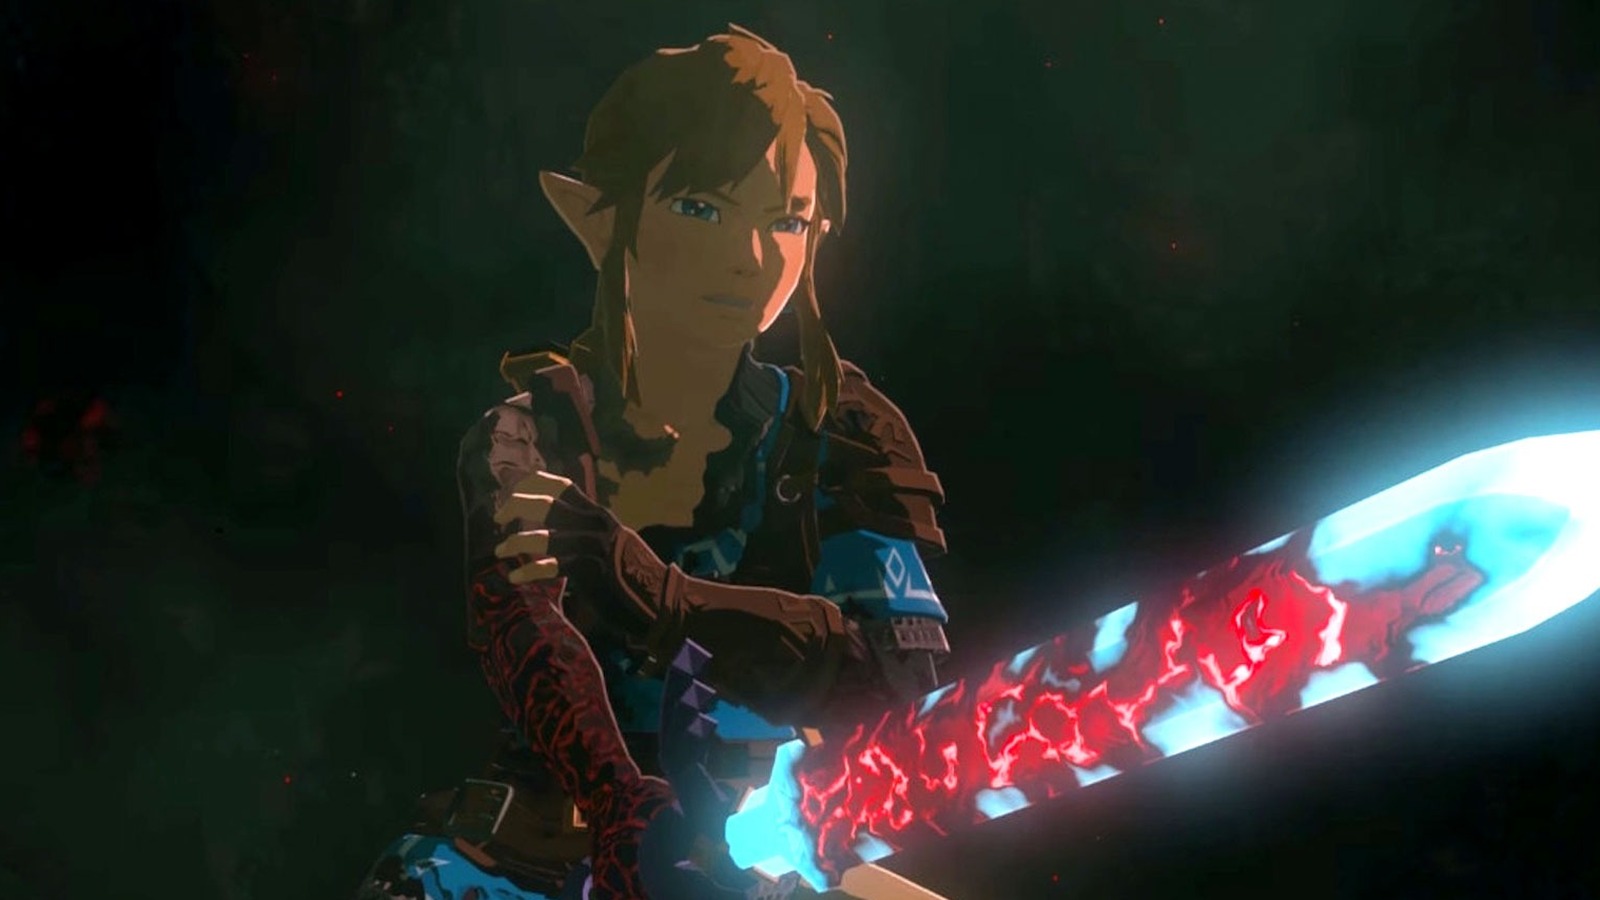 Análise Legend of Zelda: Tears of the Kingdom – ImpaktTV